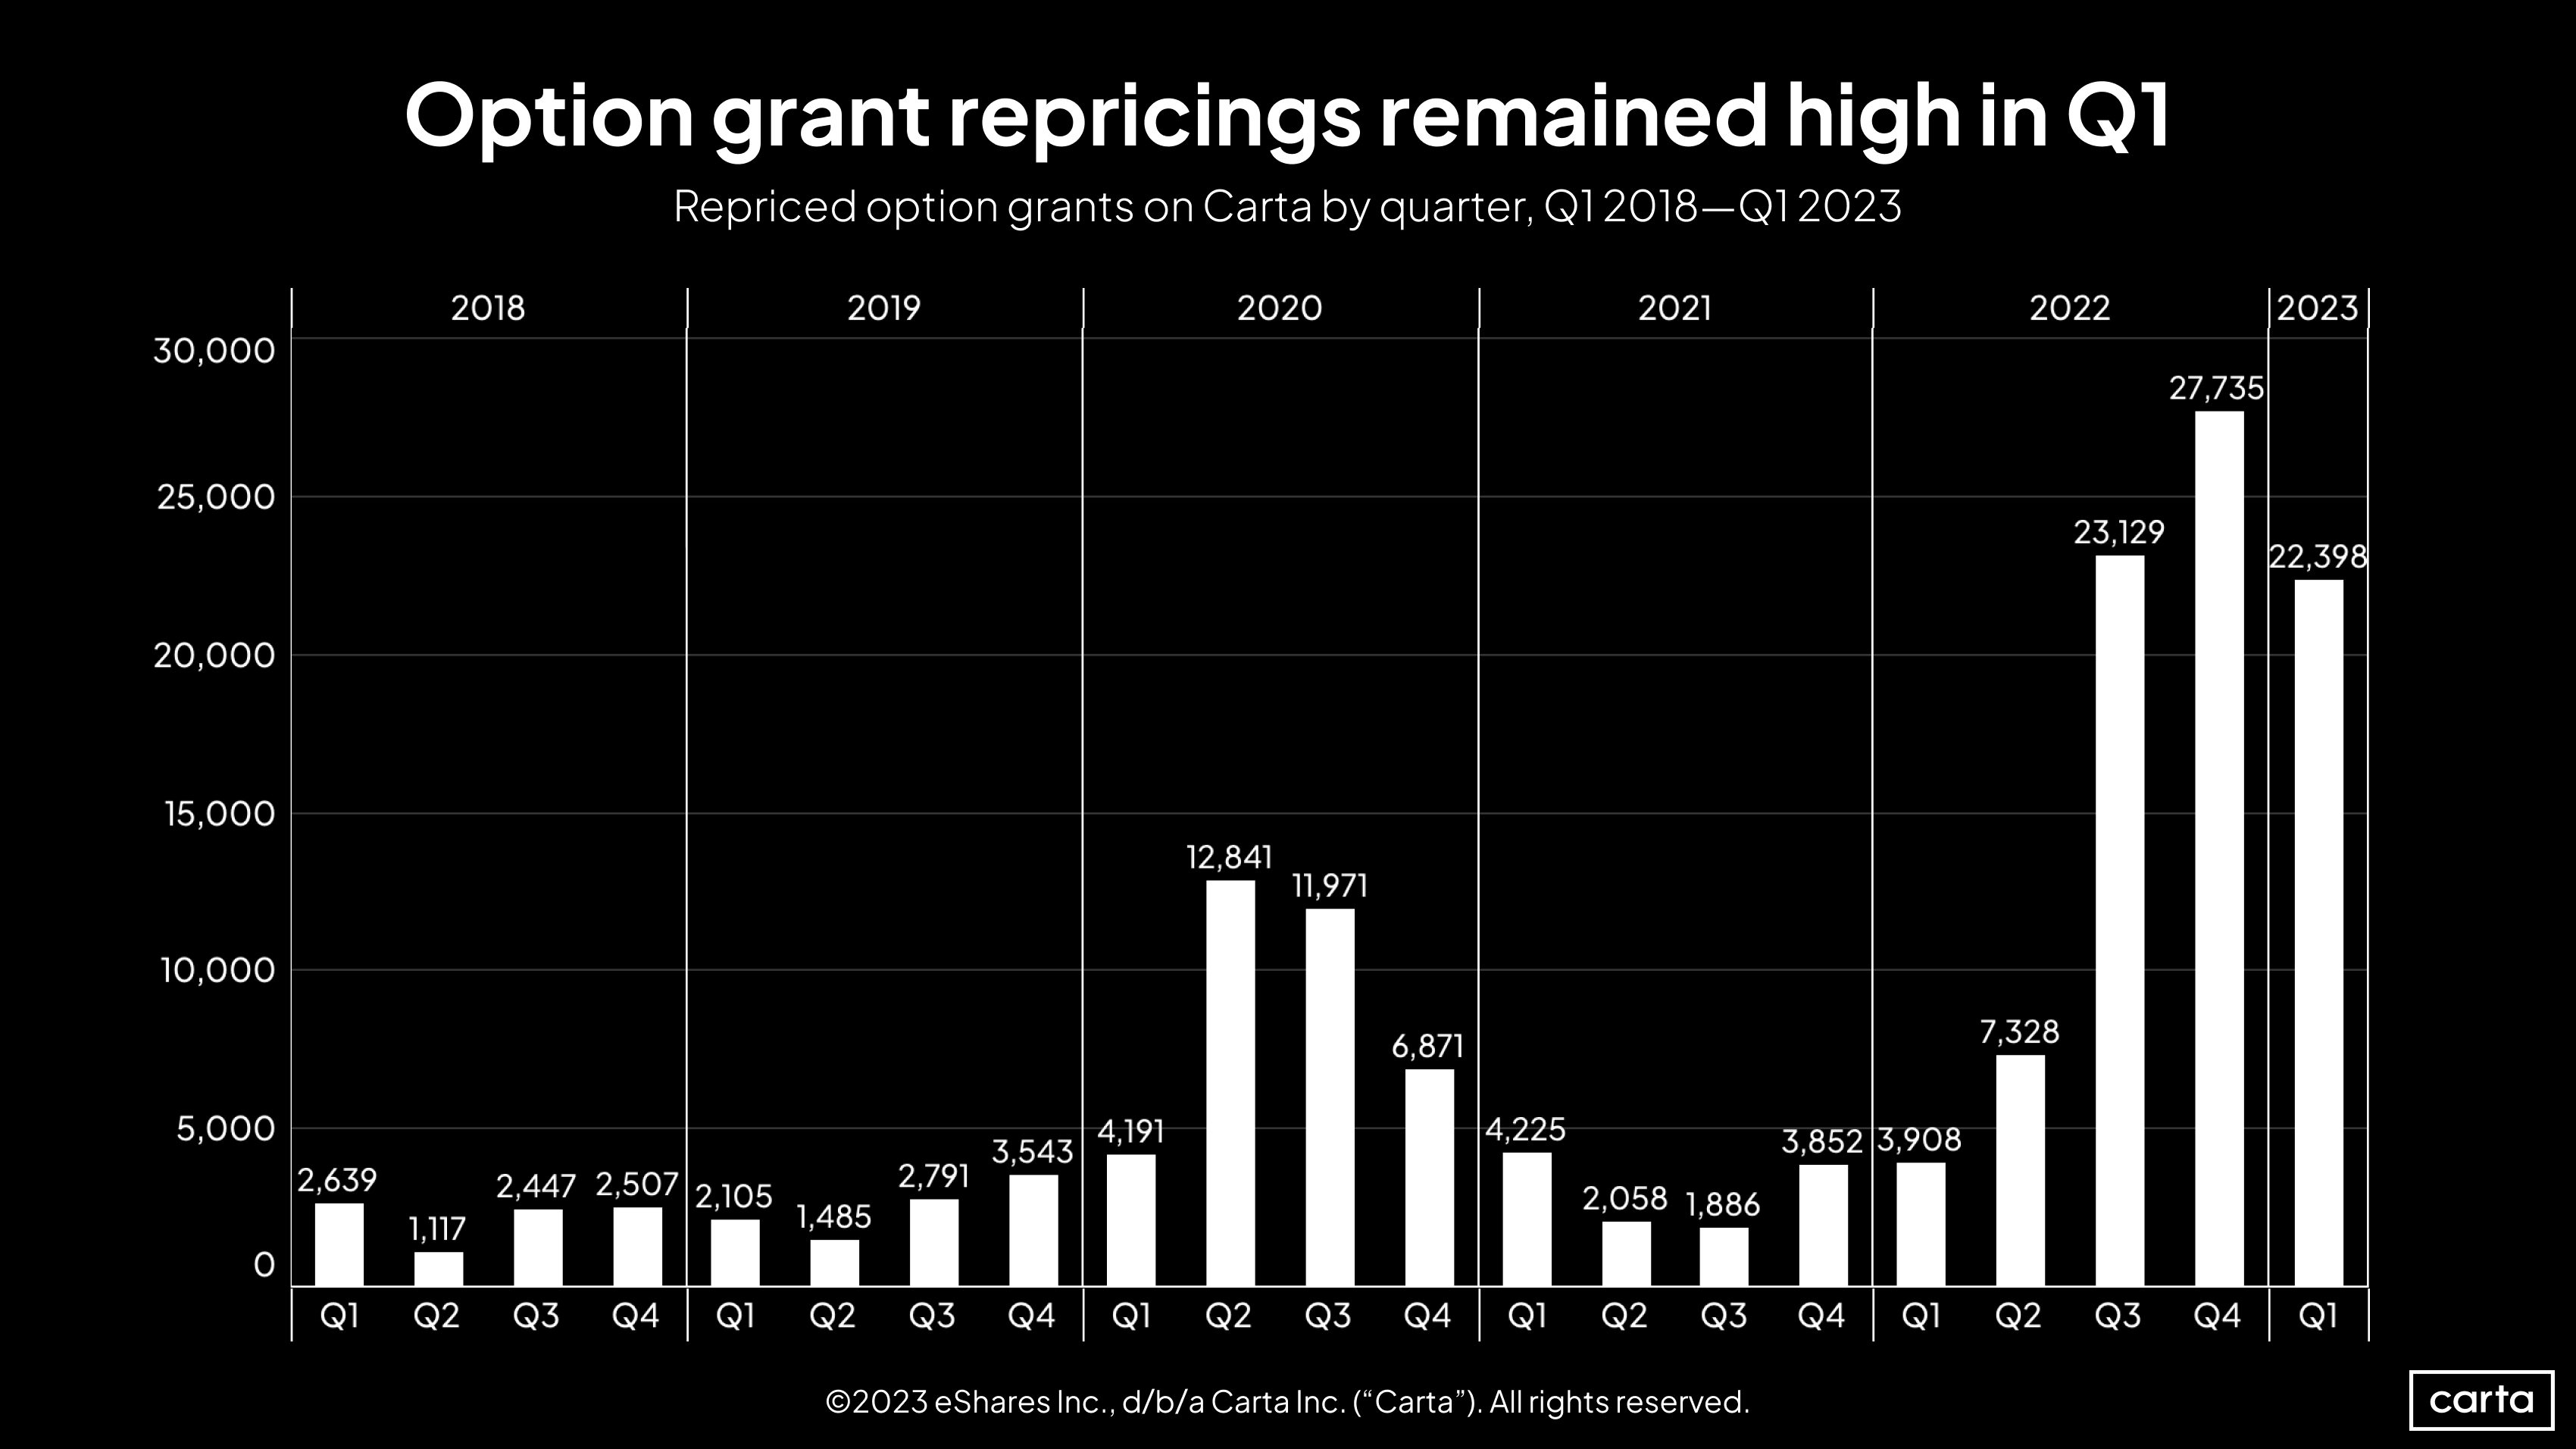 Repriced option grants on Carta by quarter, Q1 2018-Q1 2023